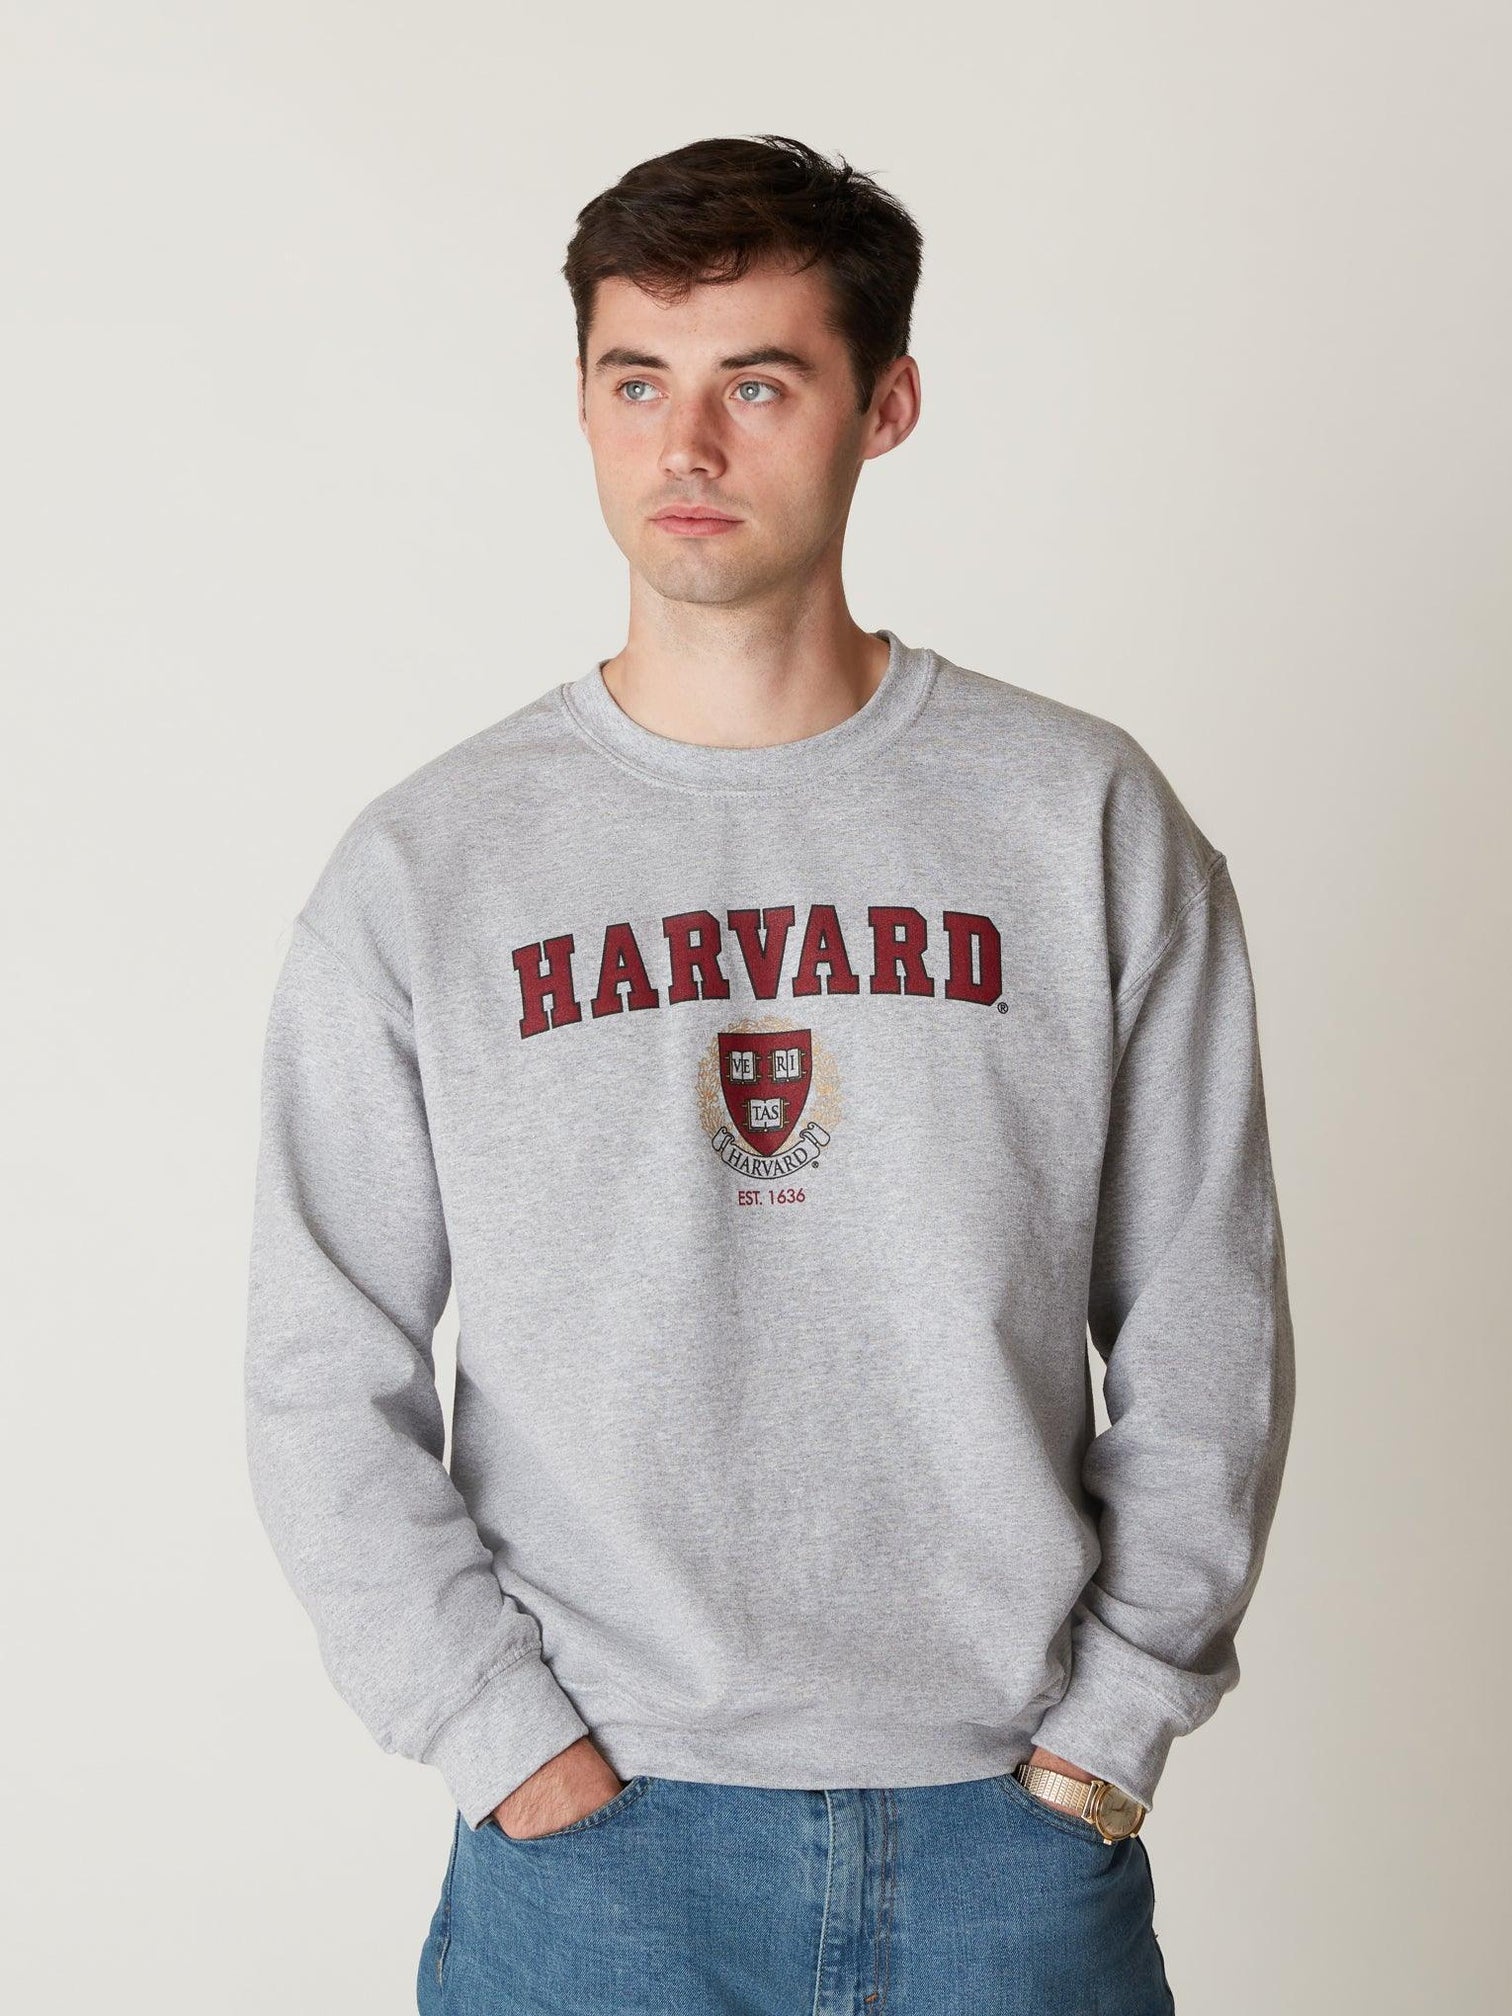 Hats – The Harvard Shop